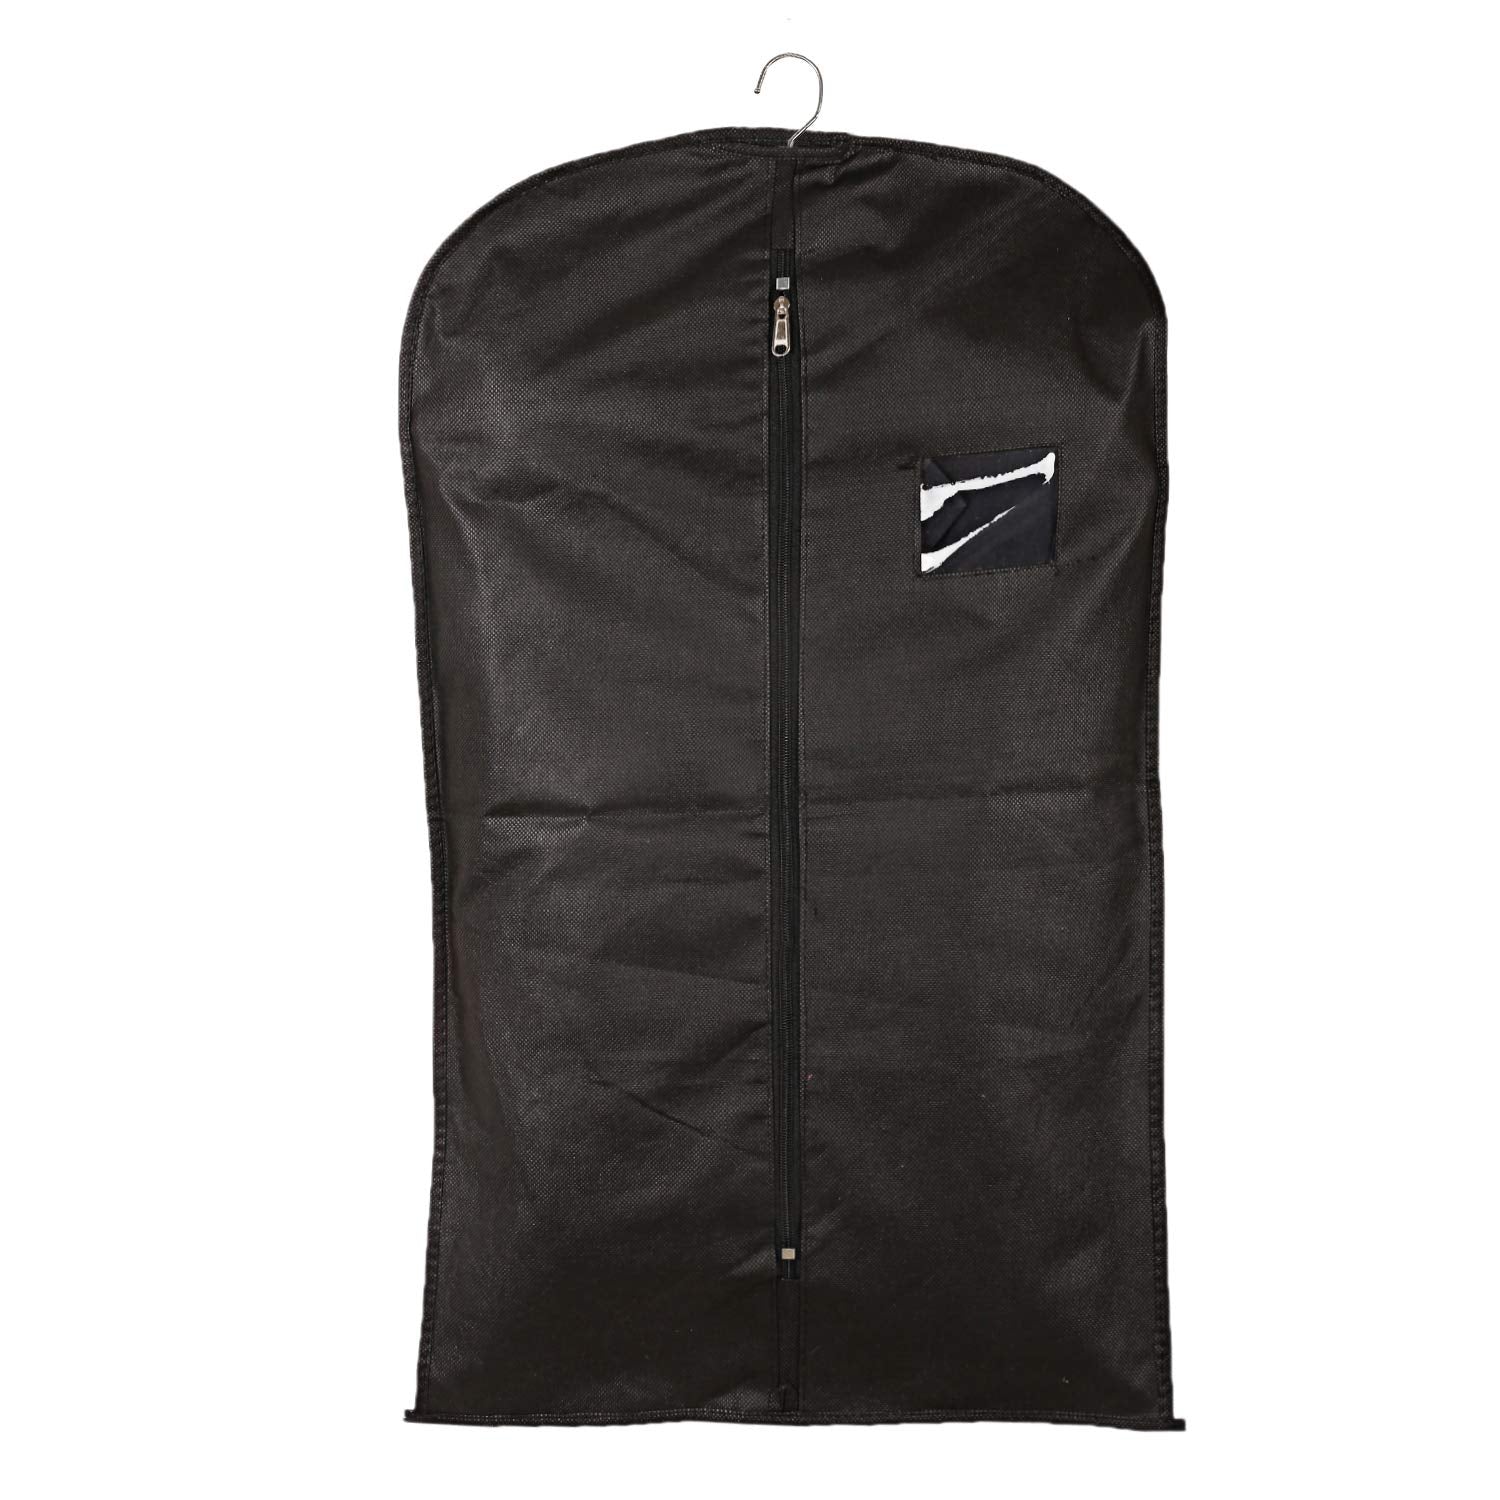 Kuber Industries Non Woven 6 Pieces Men's & Kid's Hanging Coat Blazer Suit Cloth Cover- Big & Small (Black) -NEWTC5885